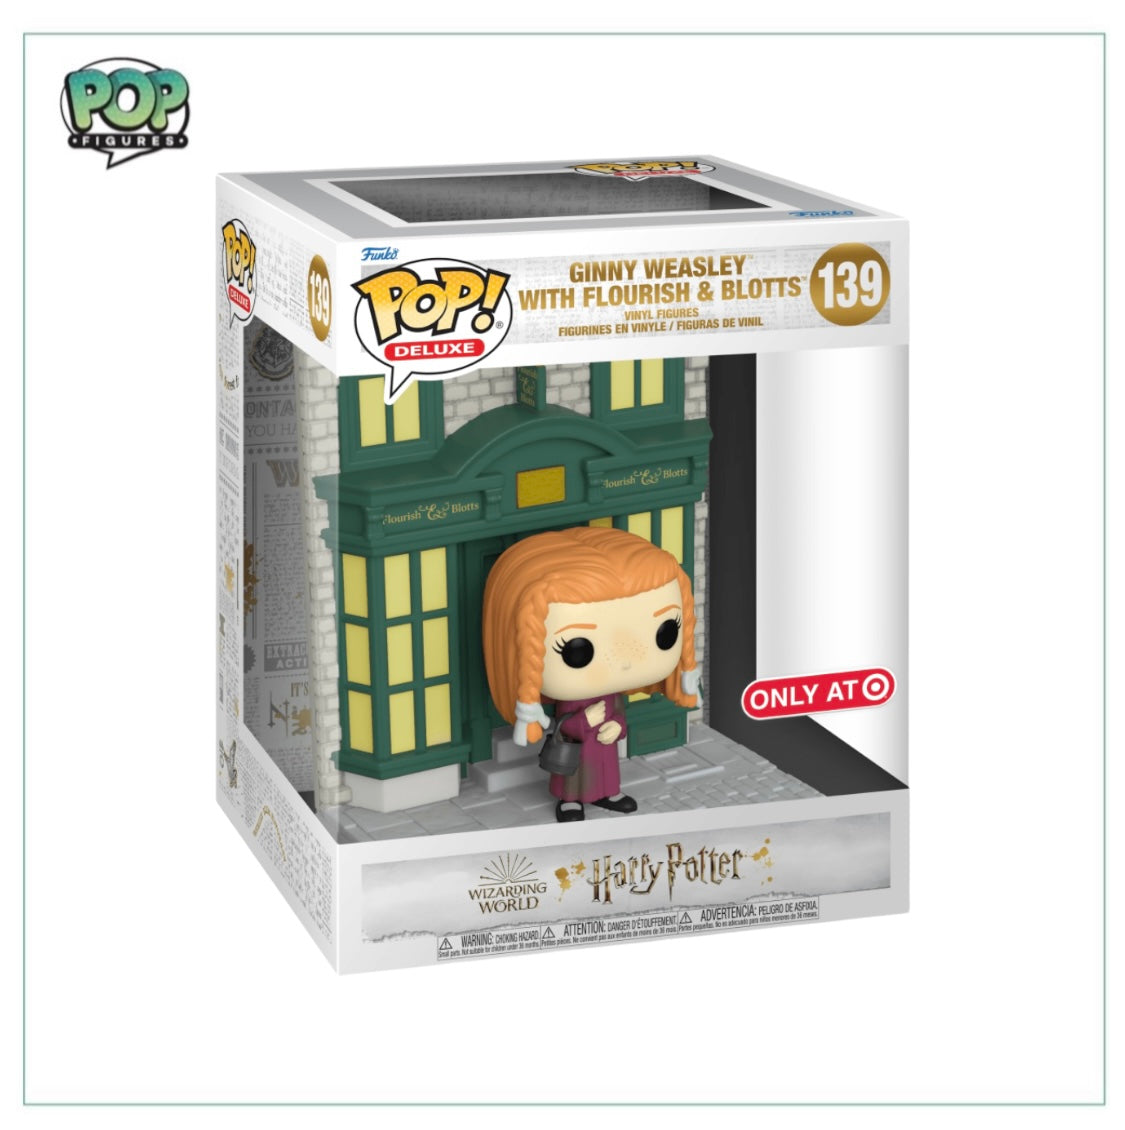 Ginny Weasley with Flourish & Blotts #139 Deluxe Funko Pop! - Harry Potter - Target Exclusive - Angry Cat